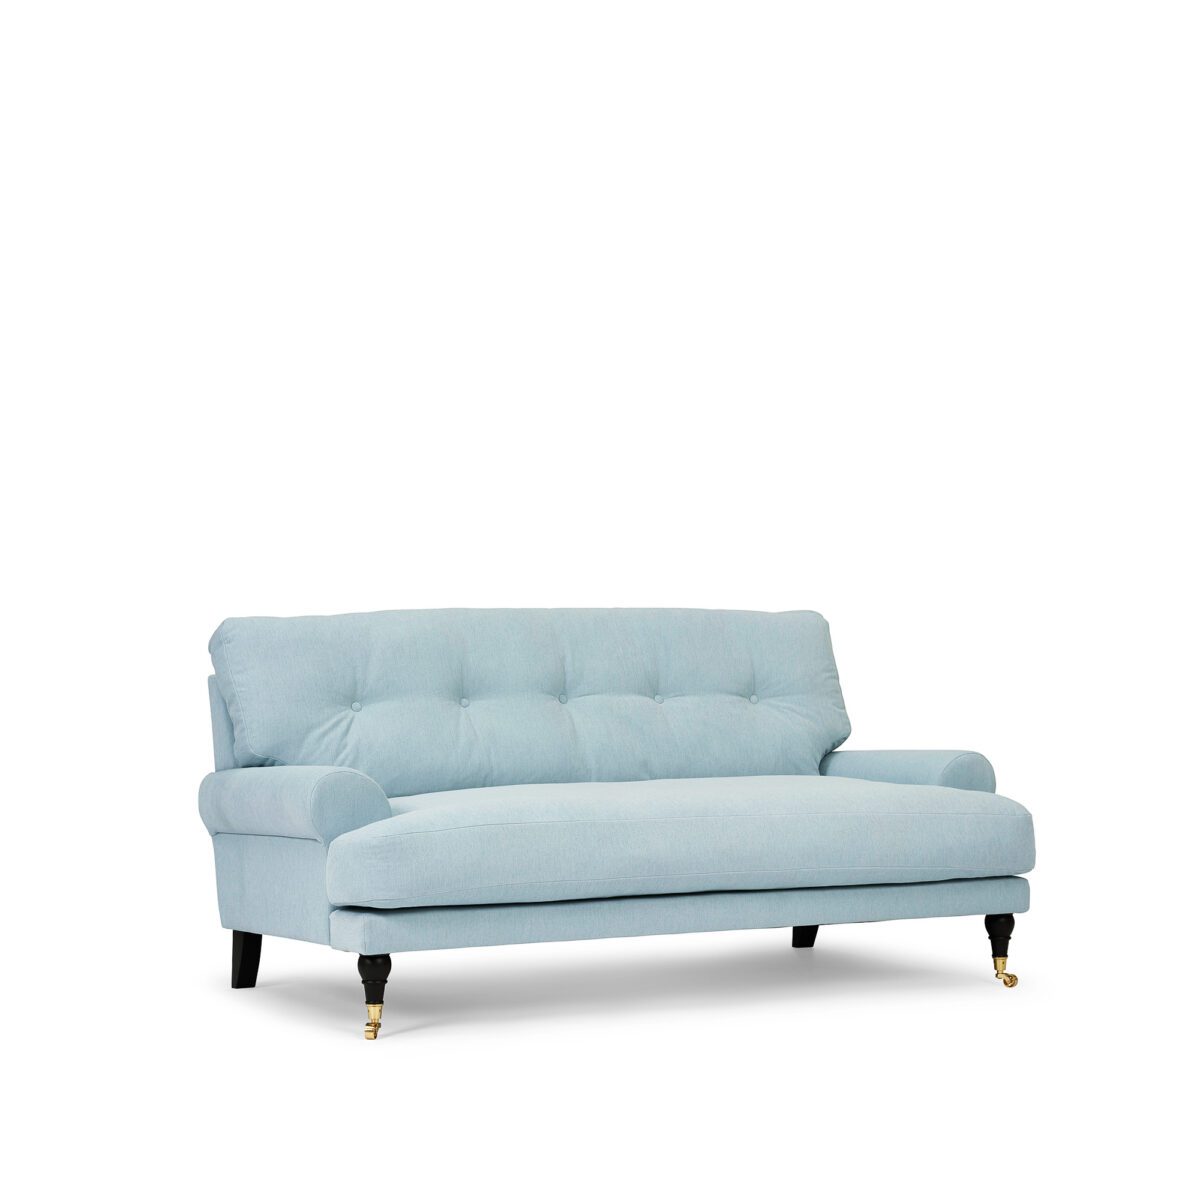 Blanca 2-Seat Sofa Baby Blue